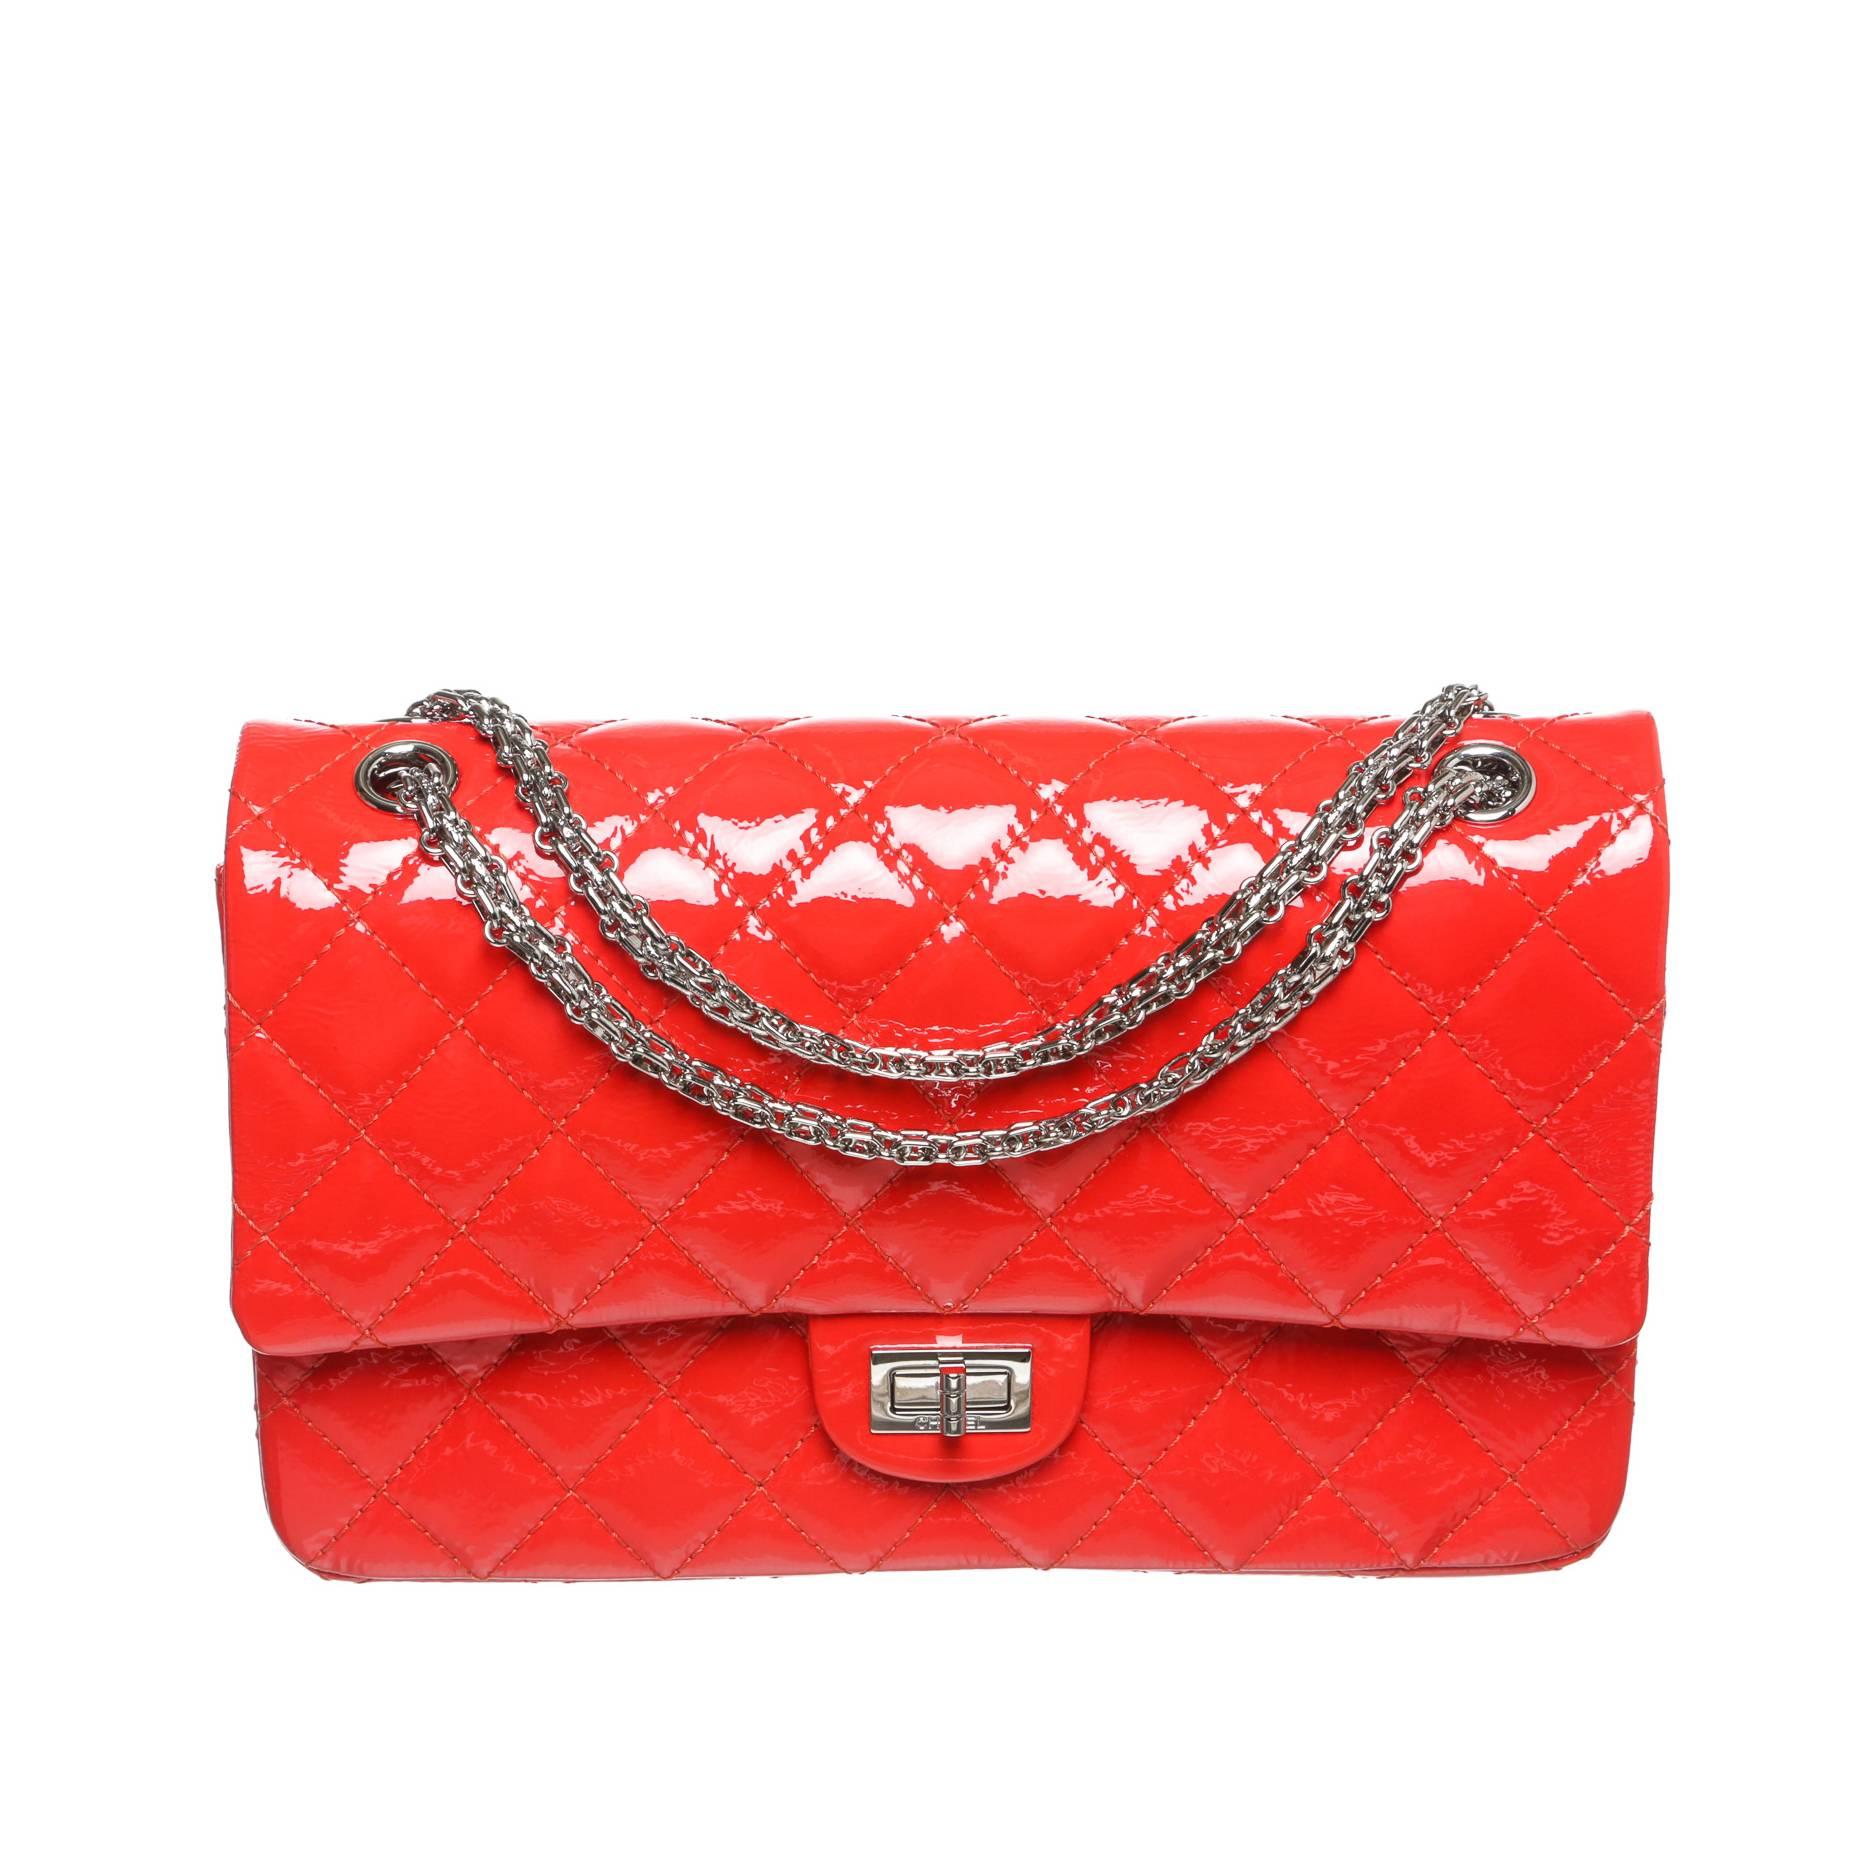 Chanel Orange Patent Leather Classic Flap Reissue 255 Handbag For Sale